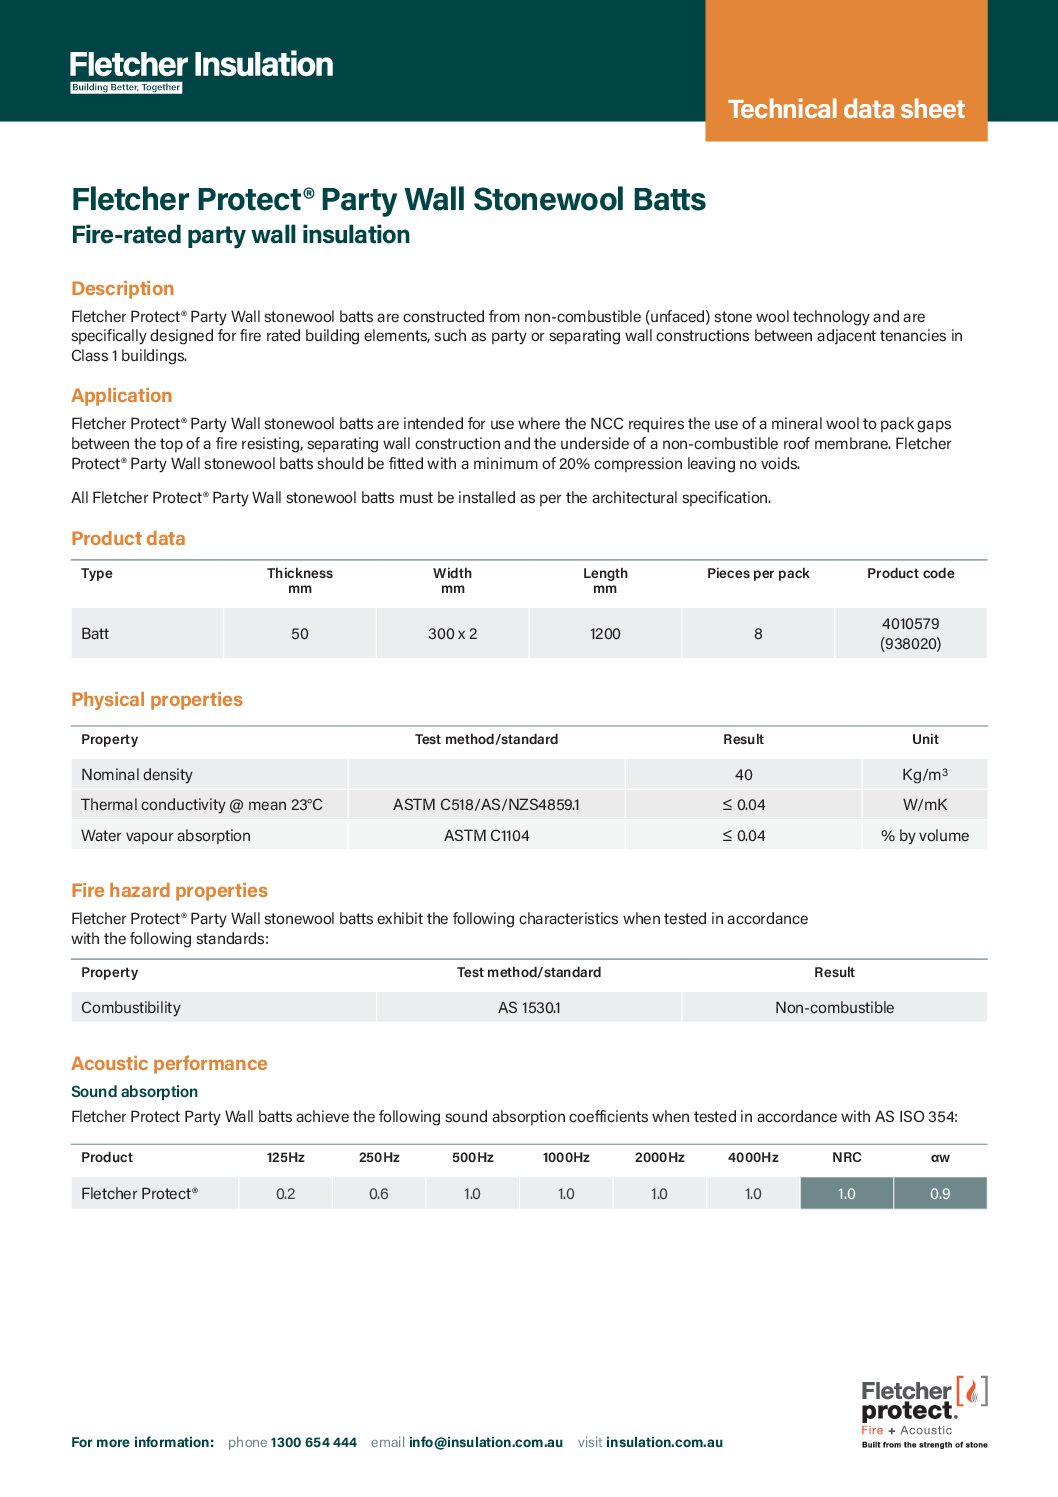 Fletcher Protect® Party Wall batts – Technical Data Sheet